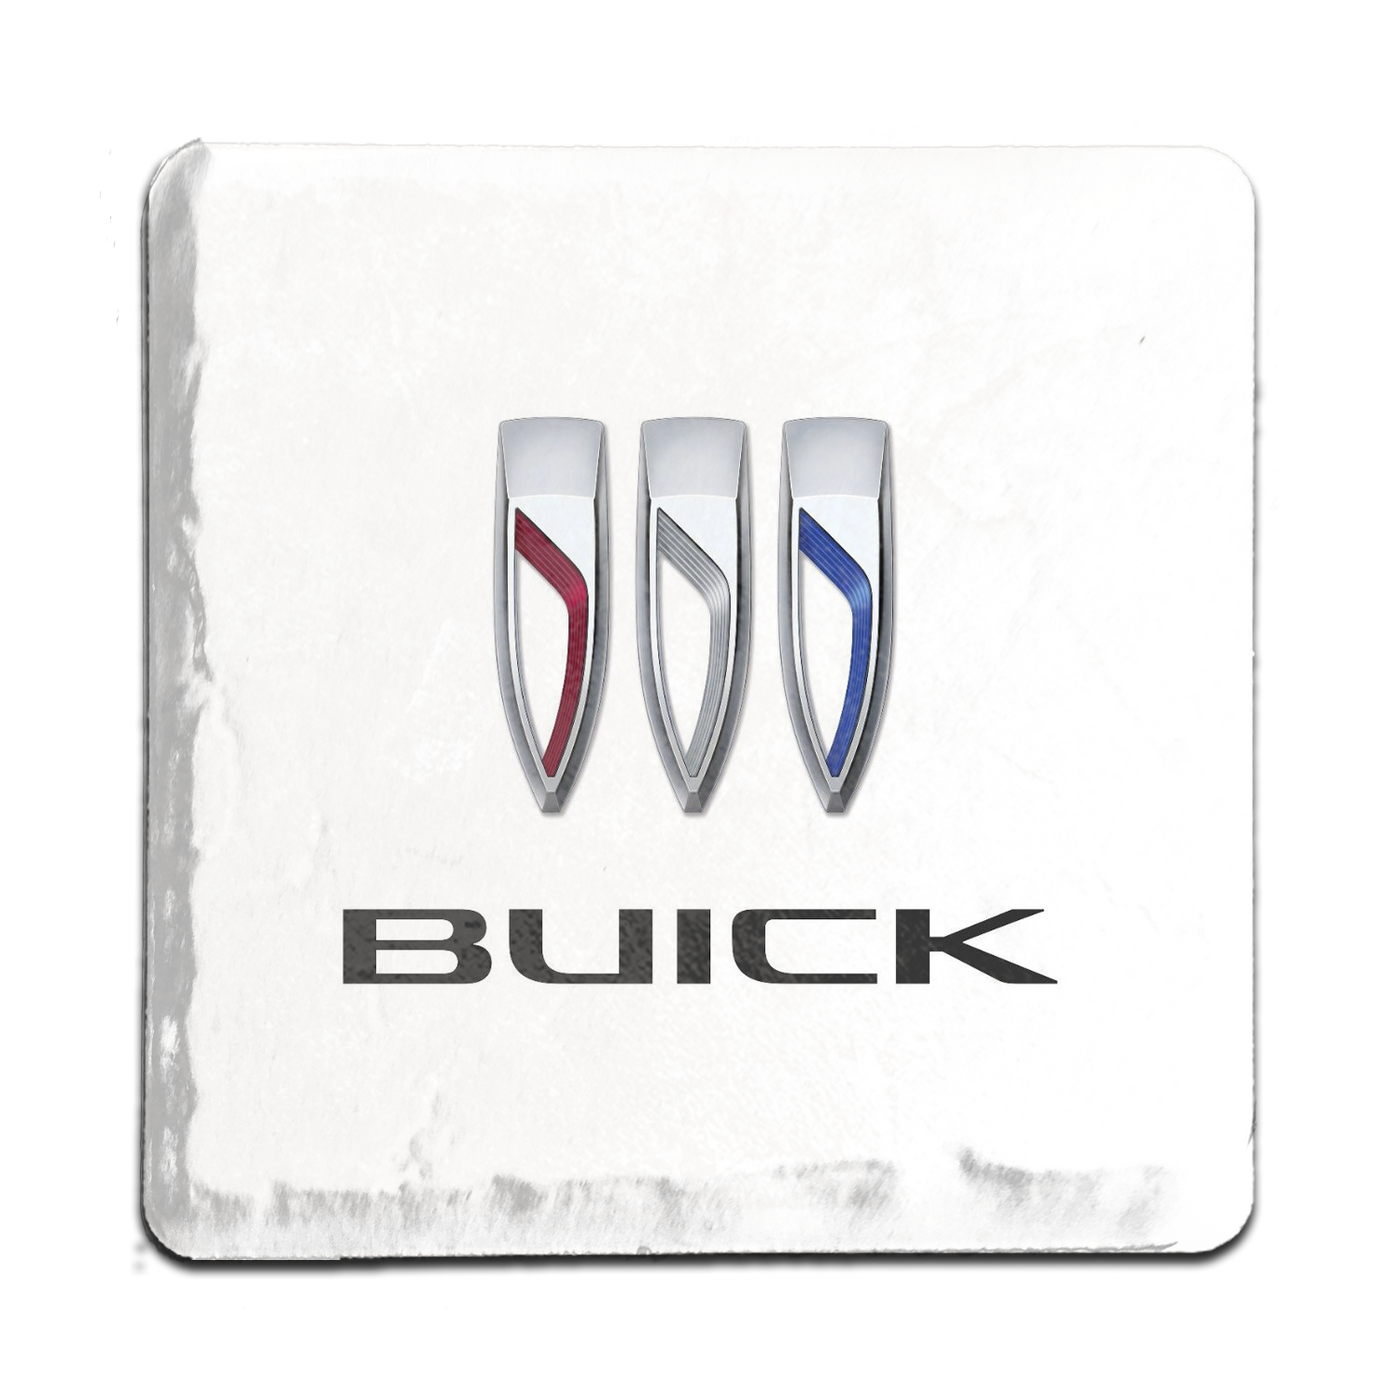 Buick Stone Tile Coaster